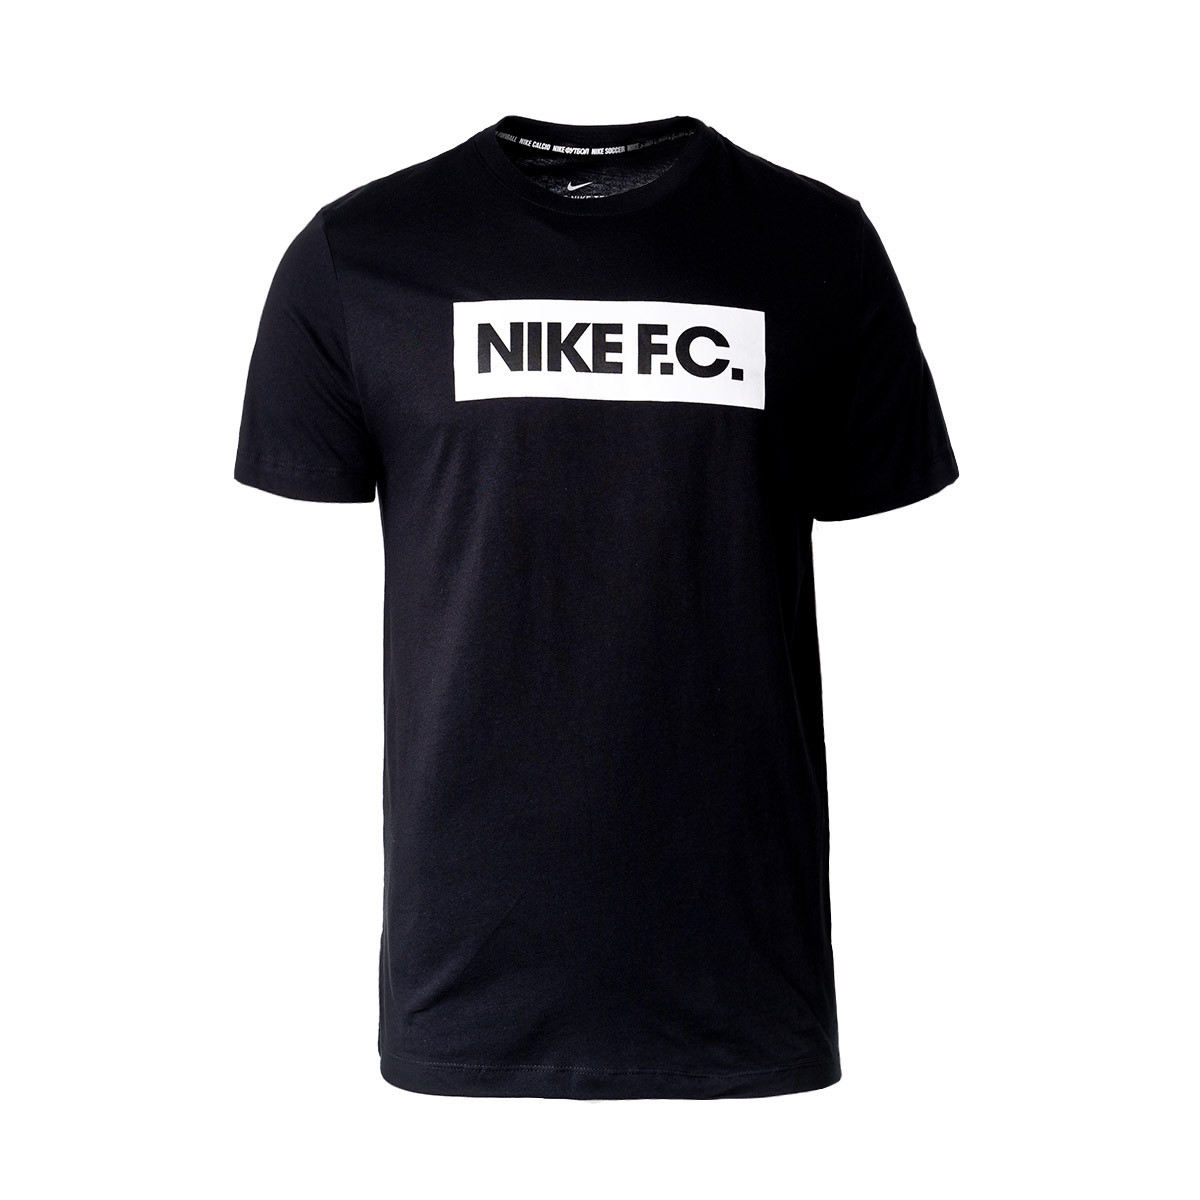 Camiseta Nike Nike Essentials Black-White - Emotion